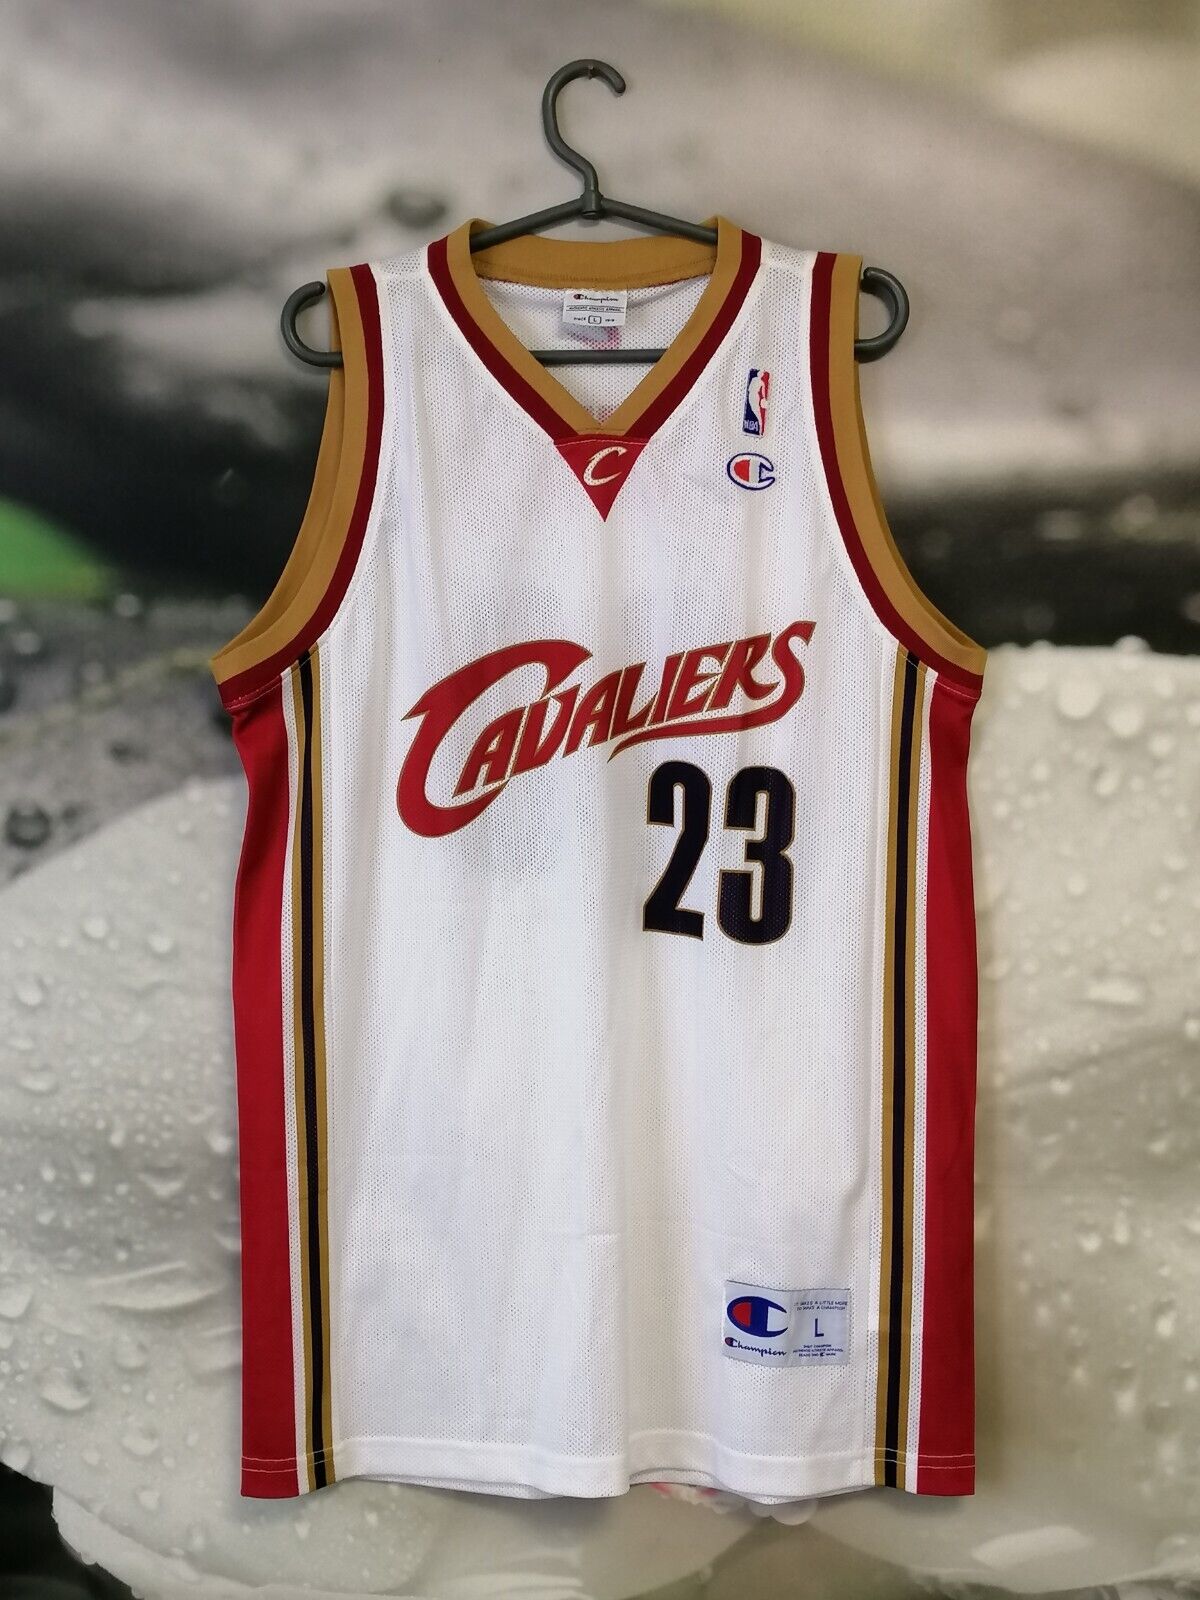 Cleveland Cavaliers LeBron James #23 Basketball NBA Champion Jersey SizeXL